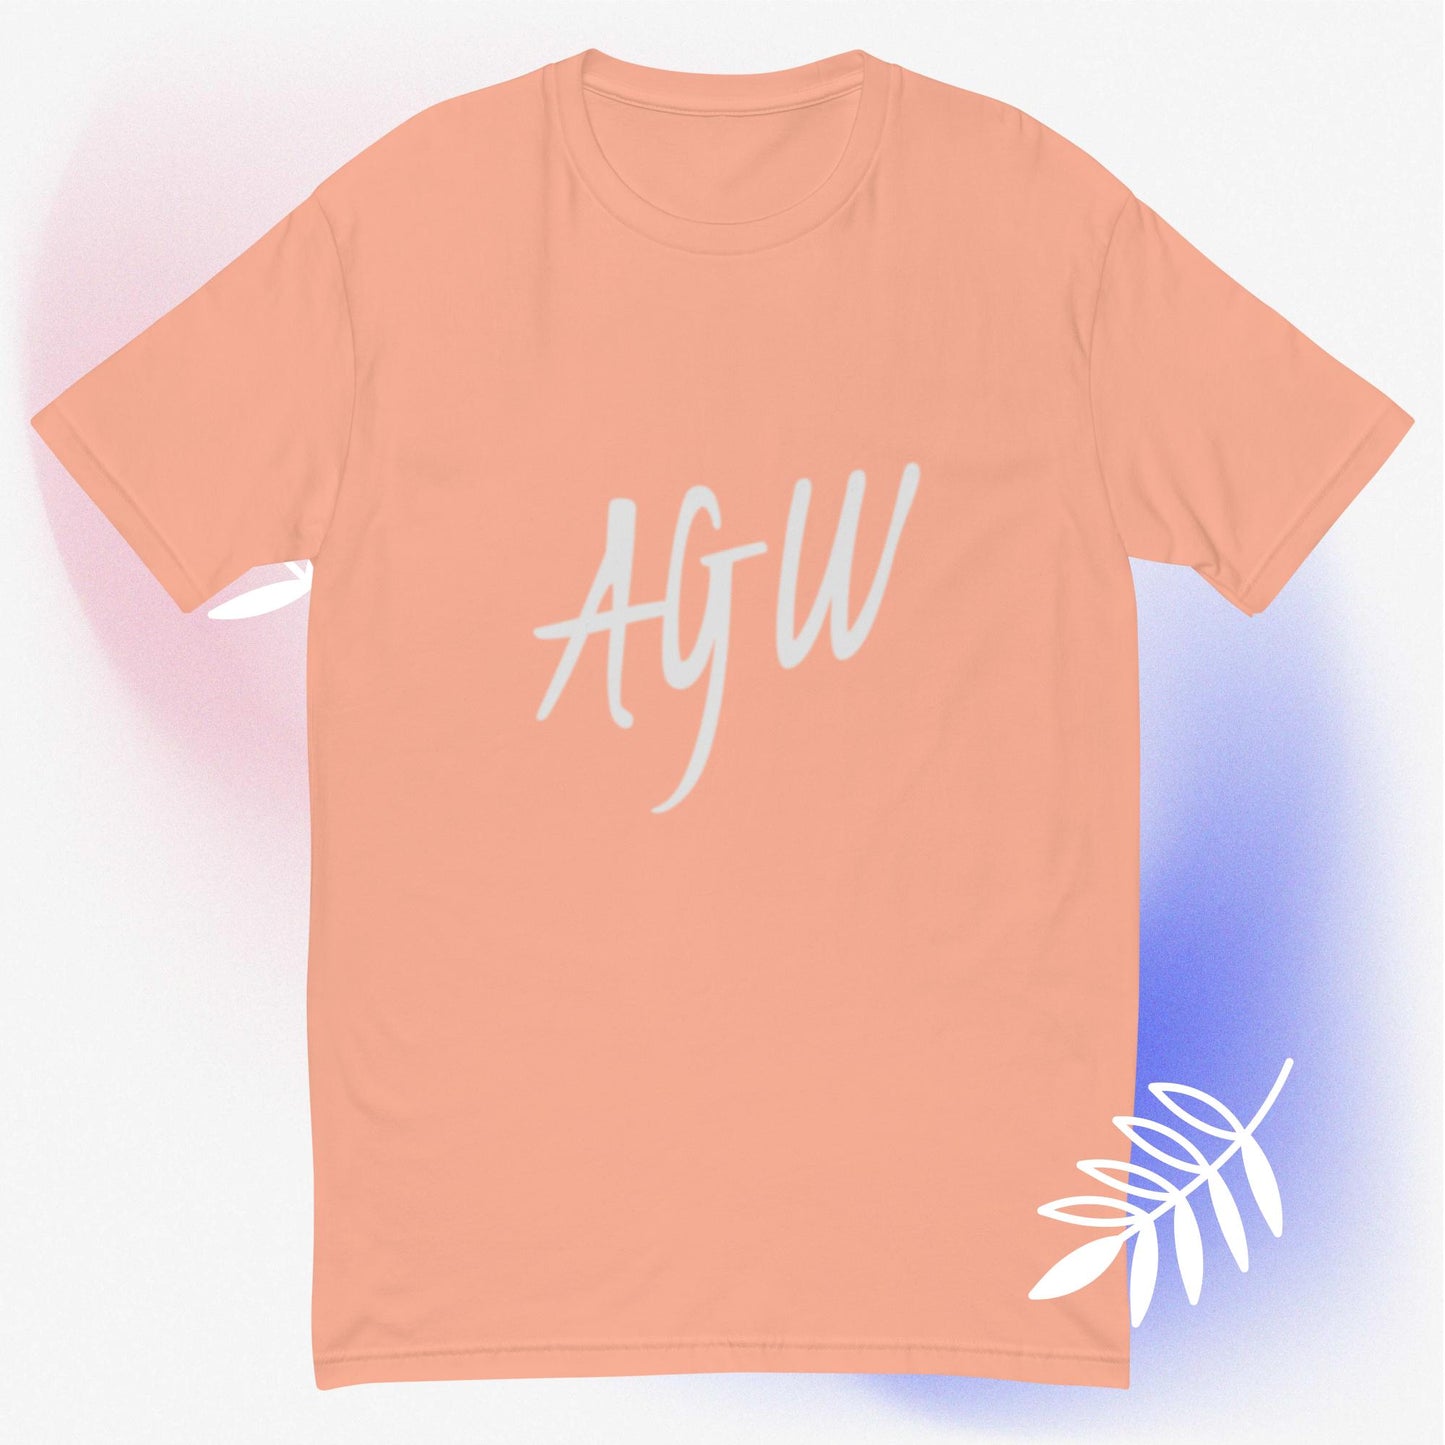 AGW Branded T-shirt